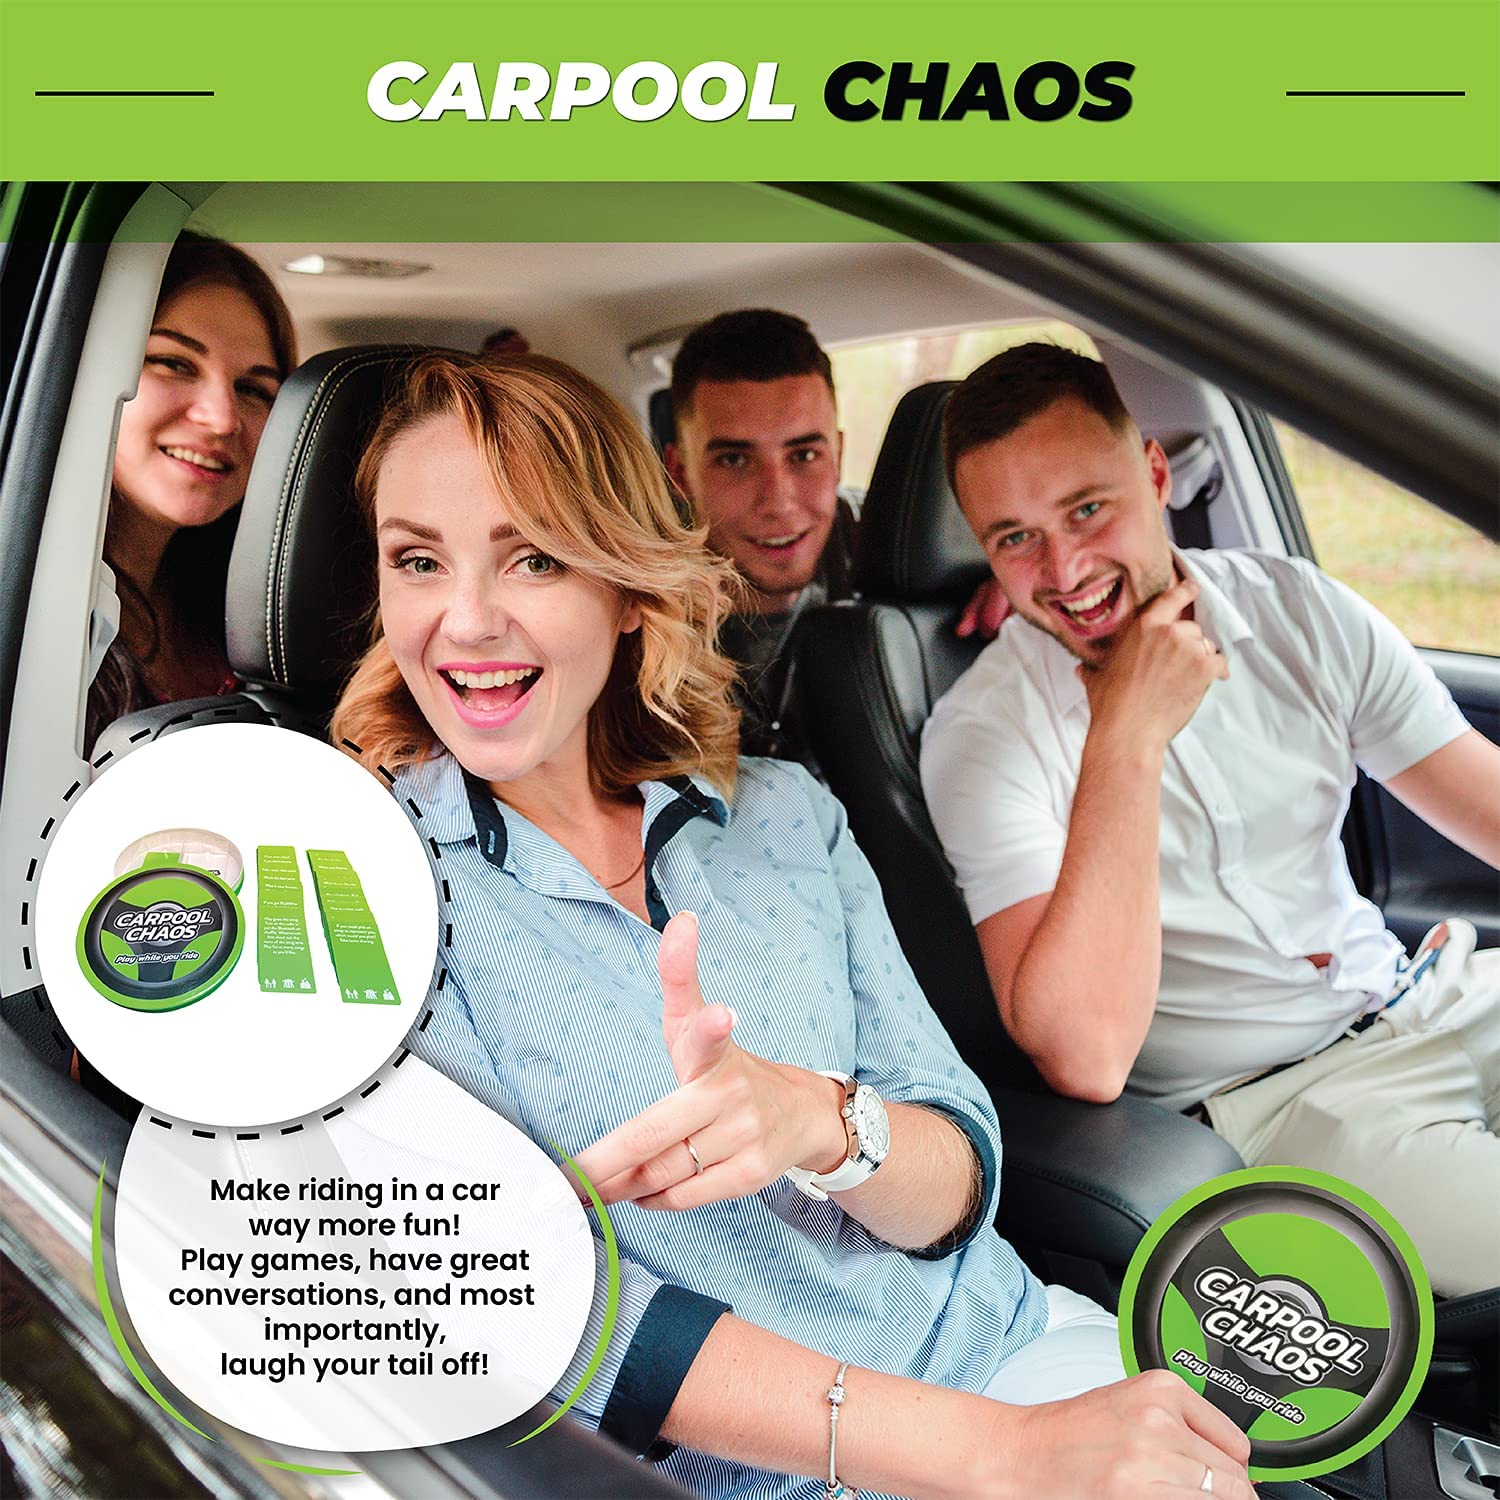 Carpool Chaos - Car Games, Travel Games, Road Trip Games, Travel Games for Kids 8-12, Road Trip Essentials Kids, Car Game Kids, Road Trip Essentials For Adults, Kids Travel Activity, Travel Essentials